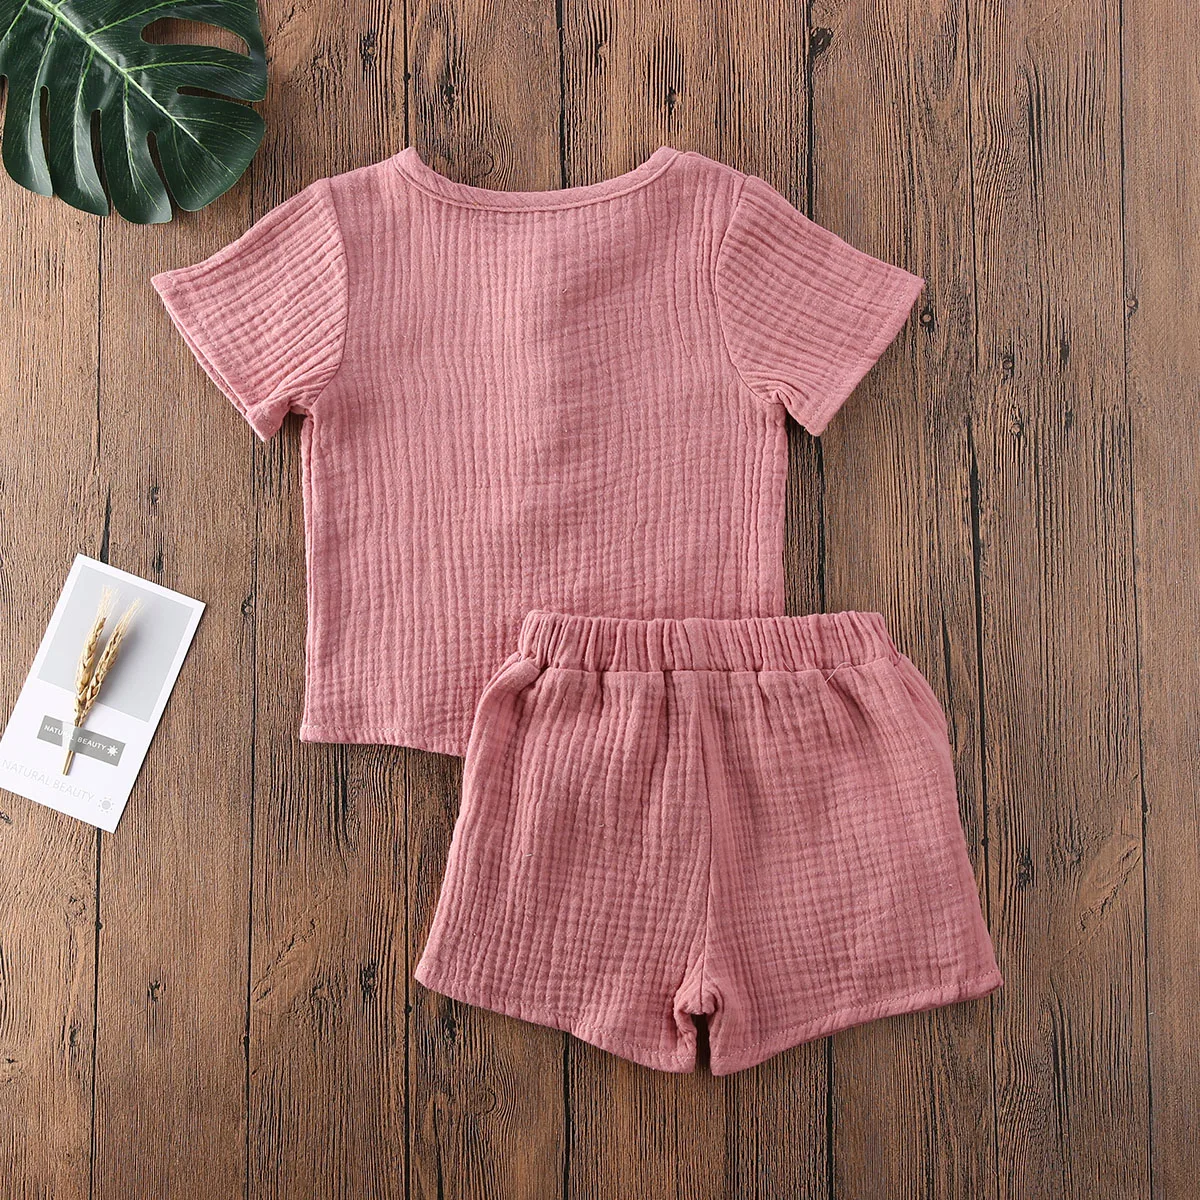 2020 Baby Summer Clothing Toddler Kids Boys Cotton Linen Casual Clothes T-shirt Tops&ampPants Short Sleeve Outfit 2Pcs Set | Детская